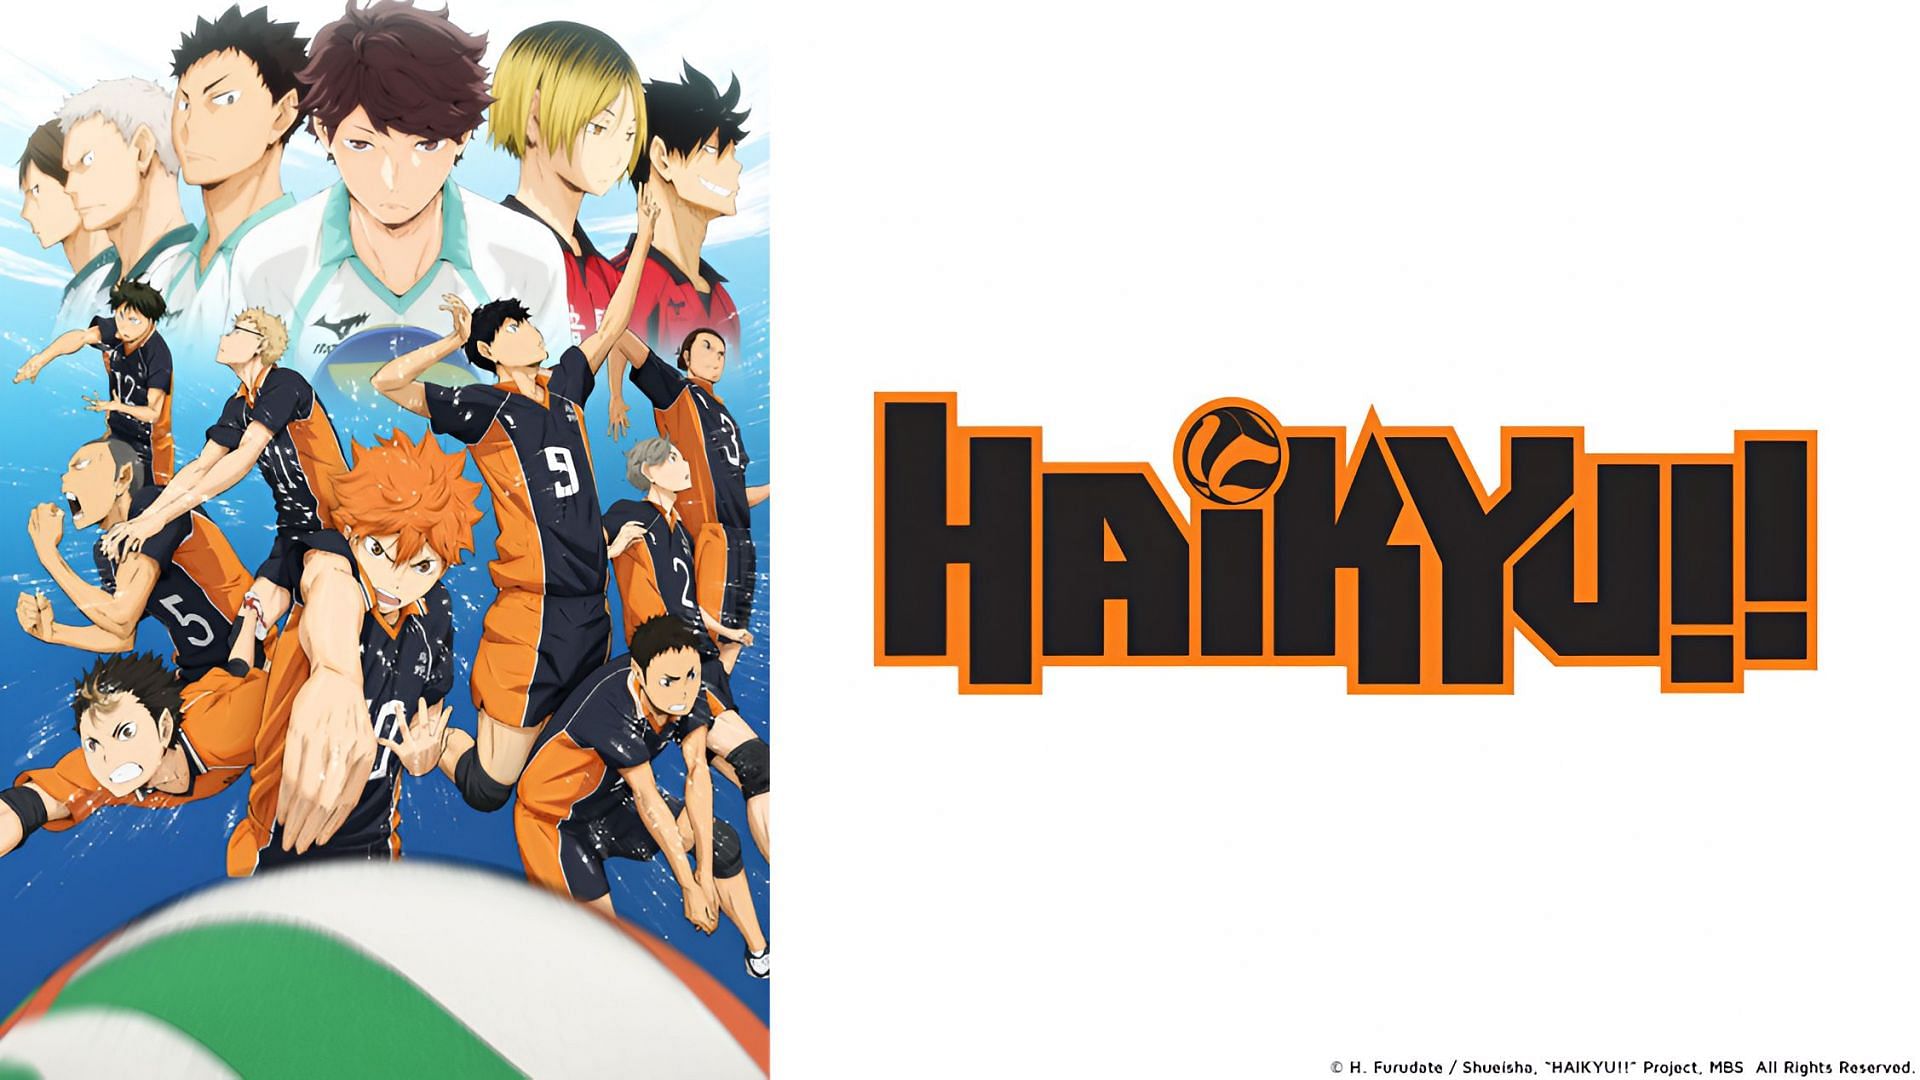 Haikyuu!! season 1 set to premiere in Hindi, Tamil, and Telugu (Image via Production I.G)